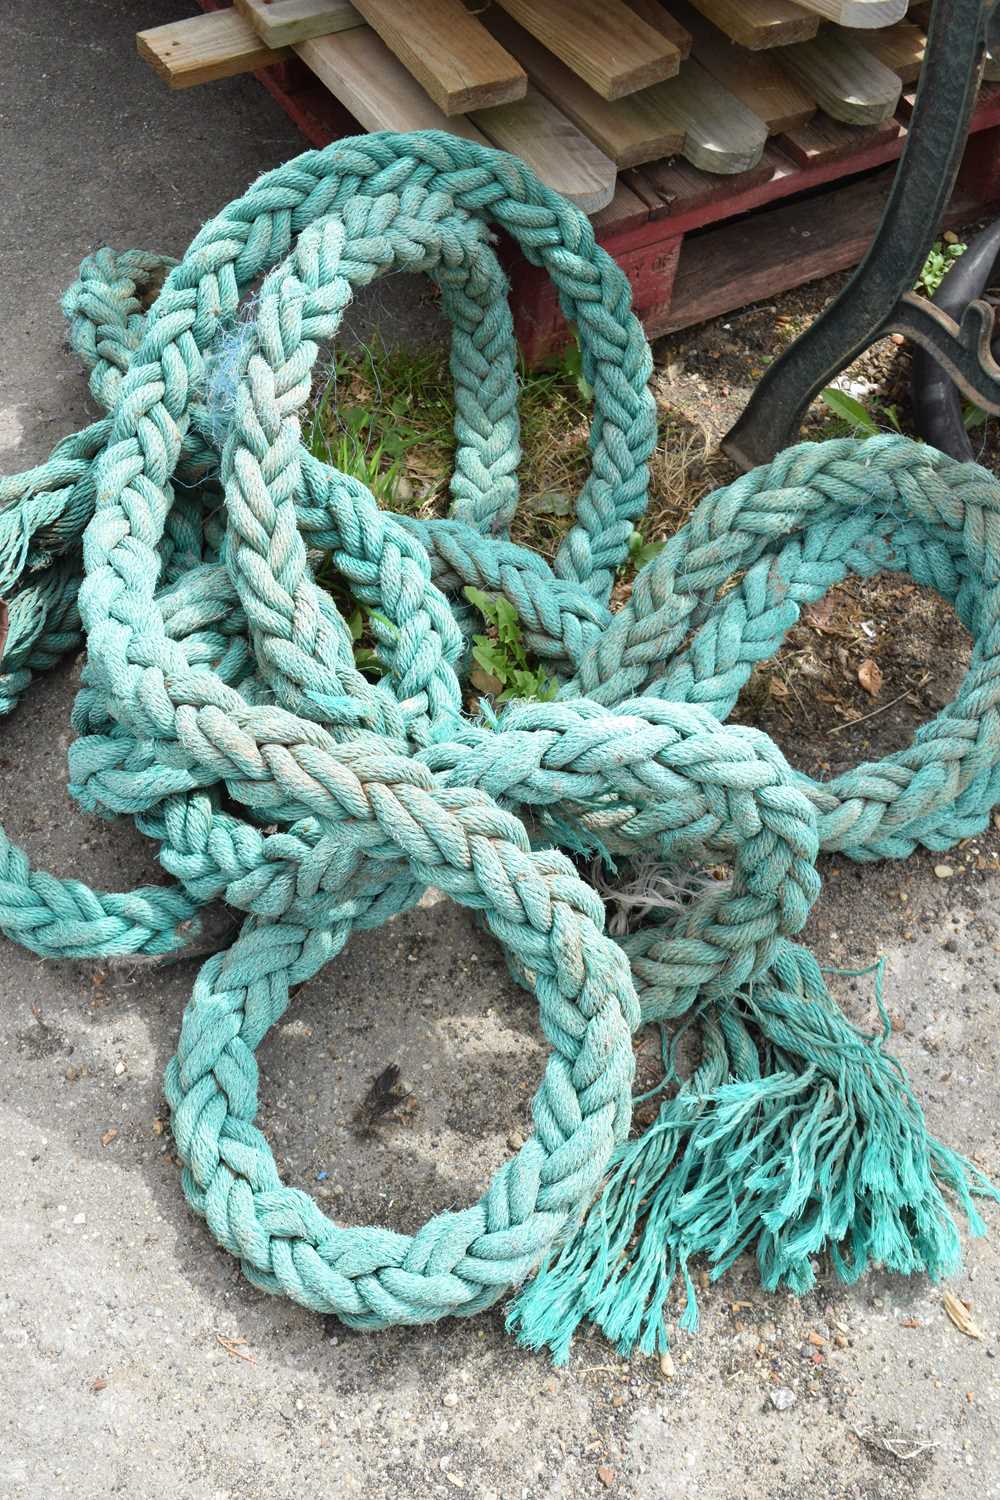 Large quantity of sailing/nautical rope